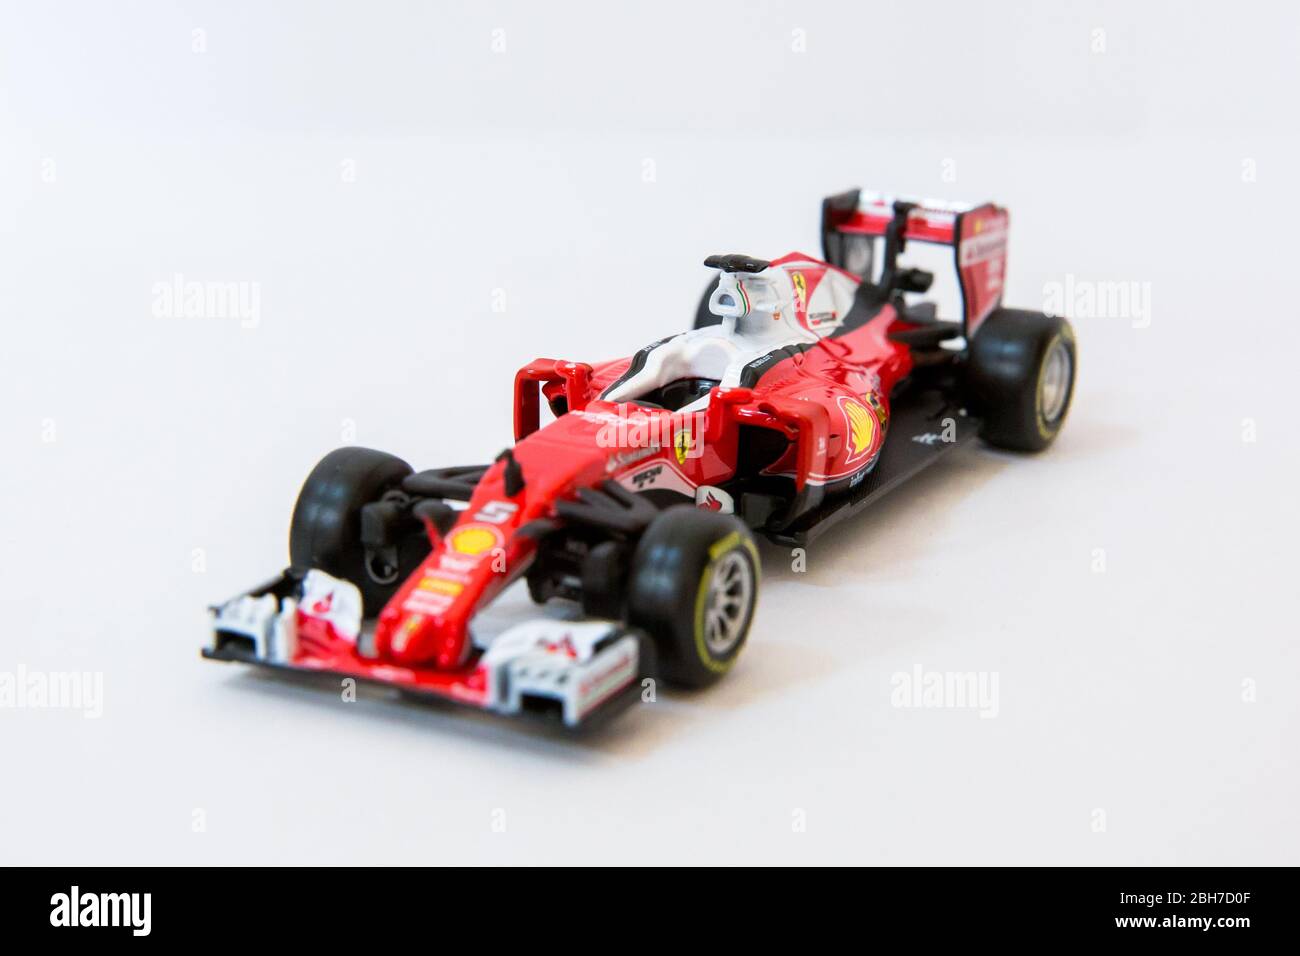 Bburago Ferrari SF16-H 1:43 model Formula One car. Sebastian Vettel's car complete with racing driver figure. Stock Photo